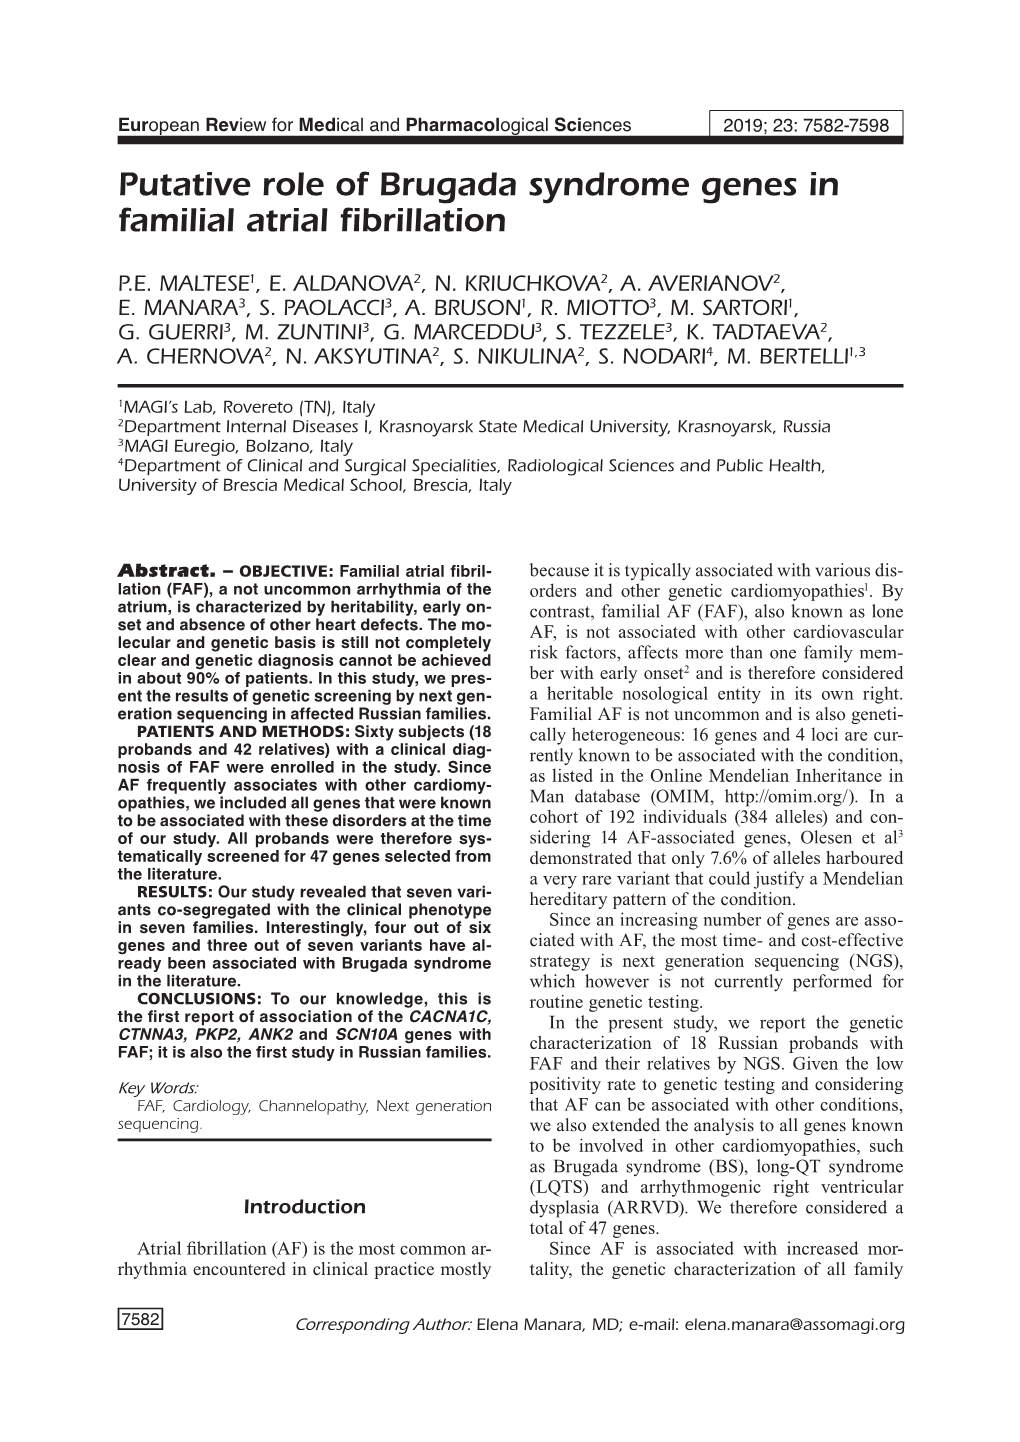 Putative Role of Brugada Syndrome Genes in Familial Atrial Fibrillation